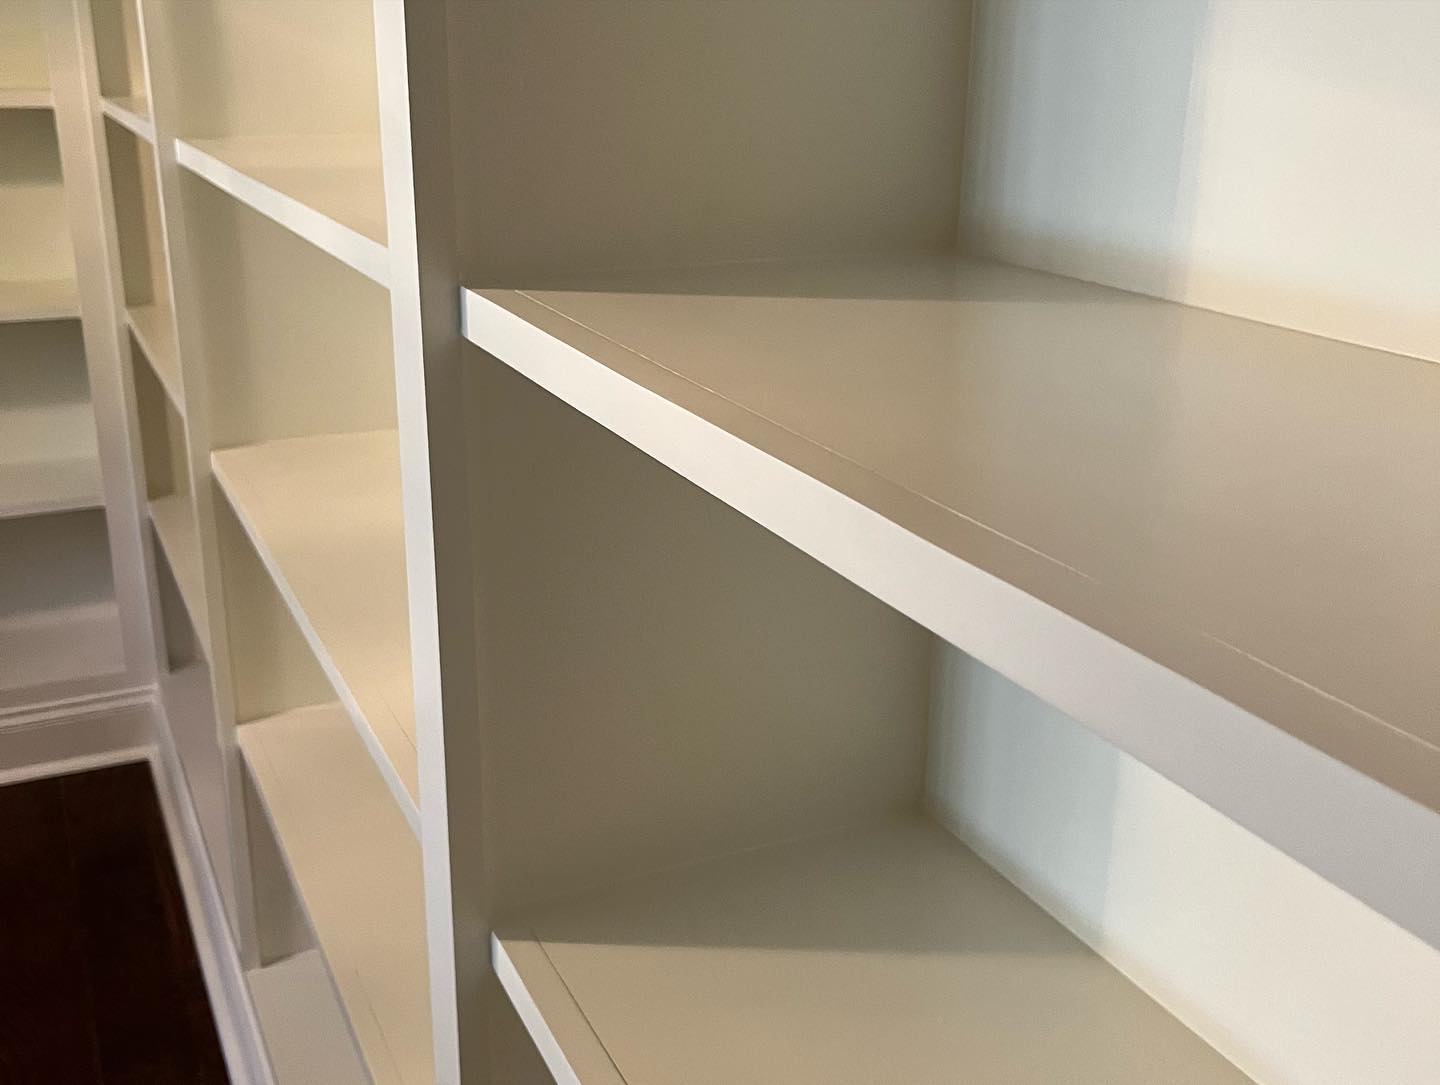 Custom Large Bookshelf Built in Cabinets Side View Single Shelf